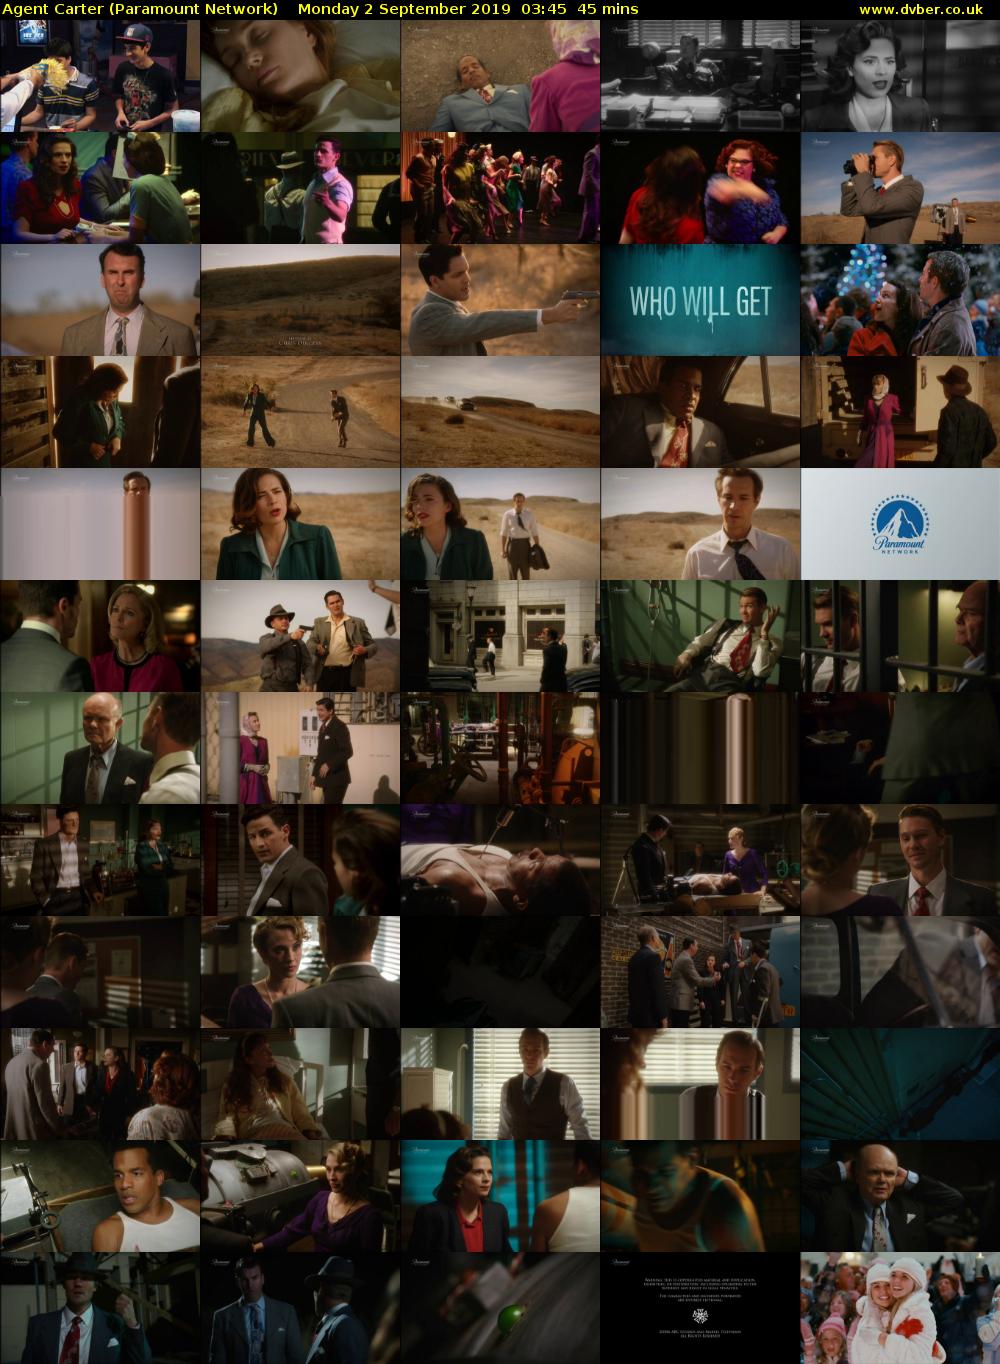 Agent Carter (Paramount Network) Monday 2 September 2019 03:45 - 04:30